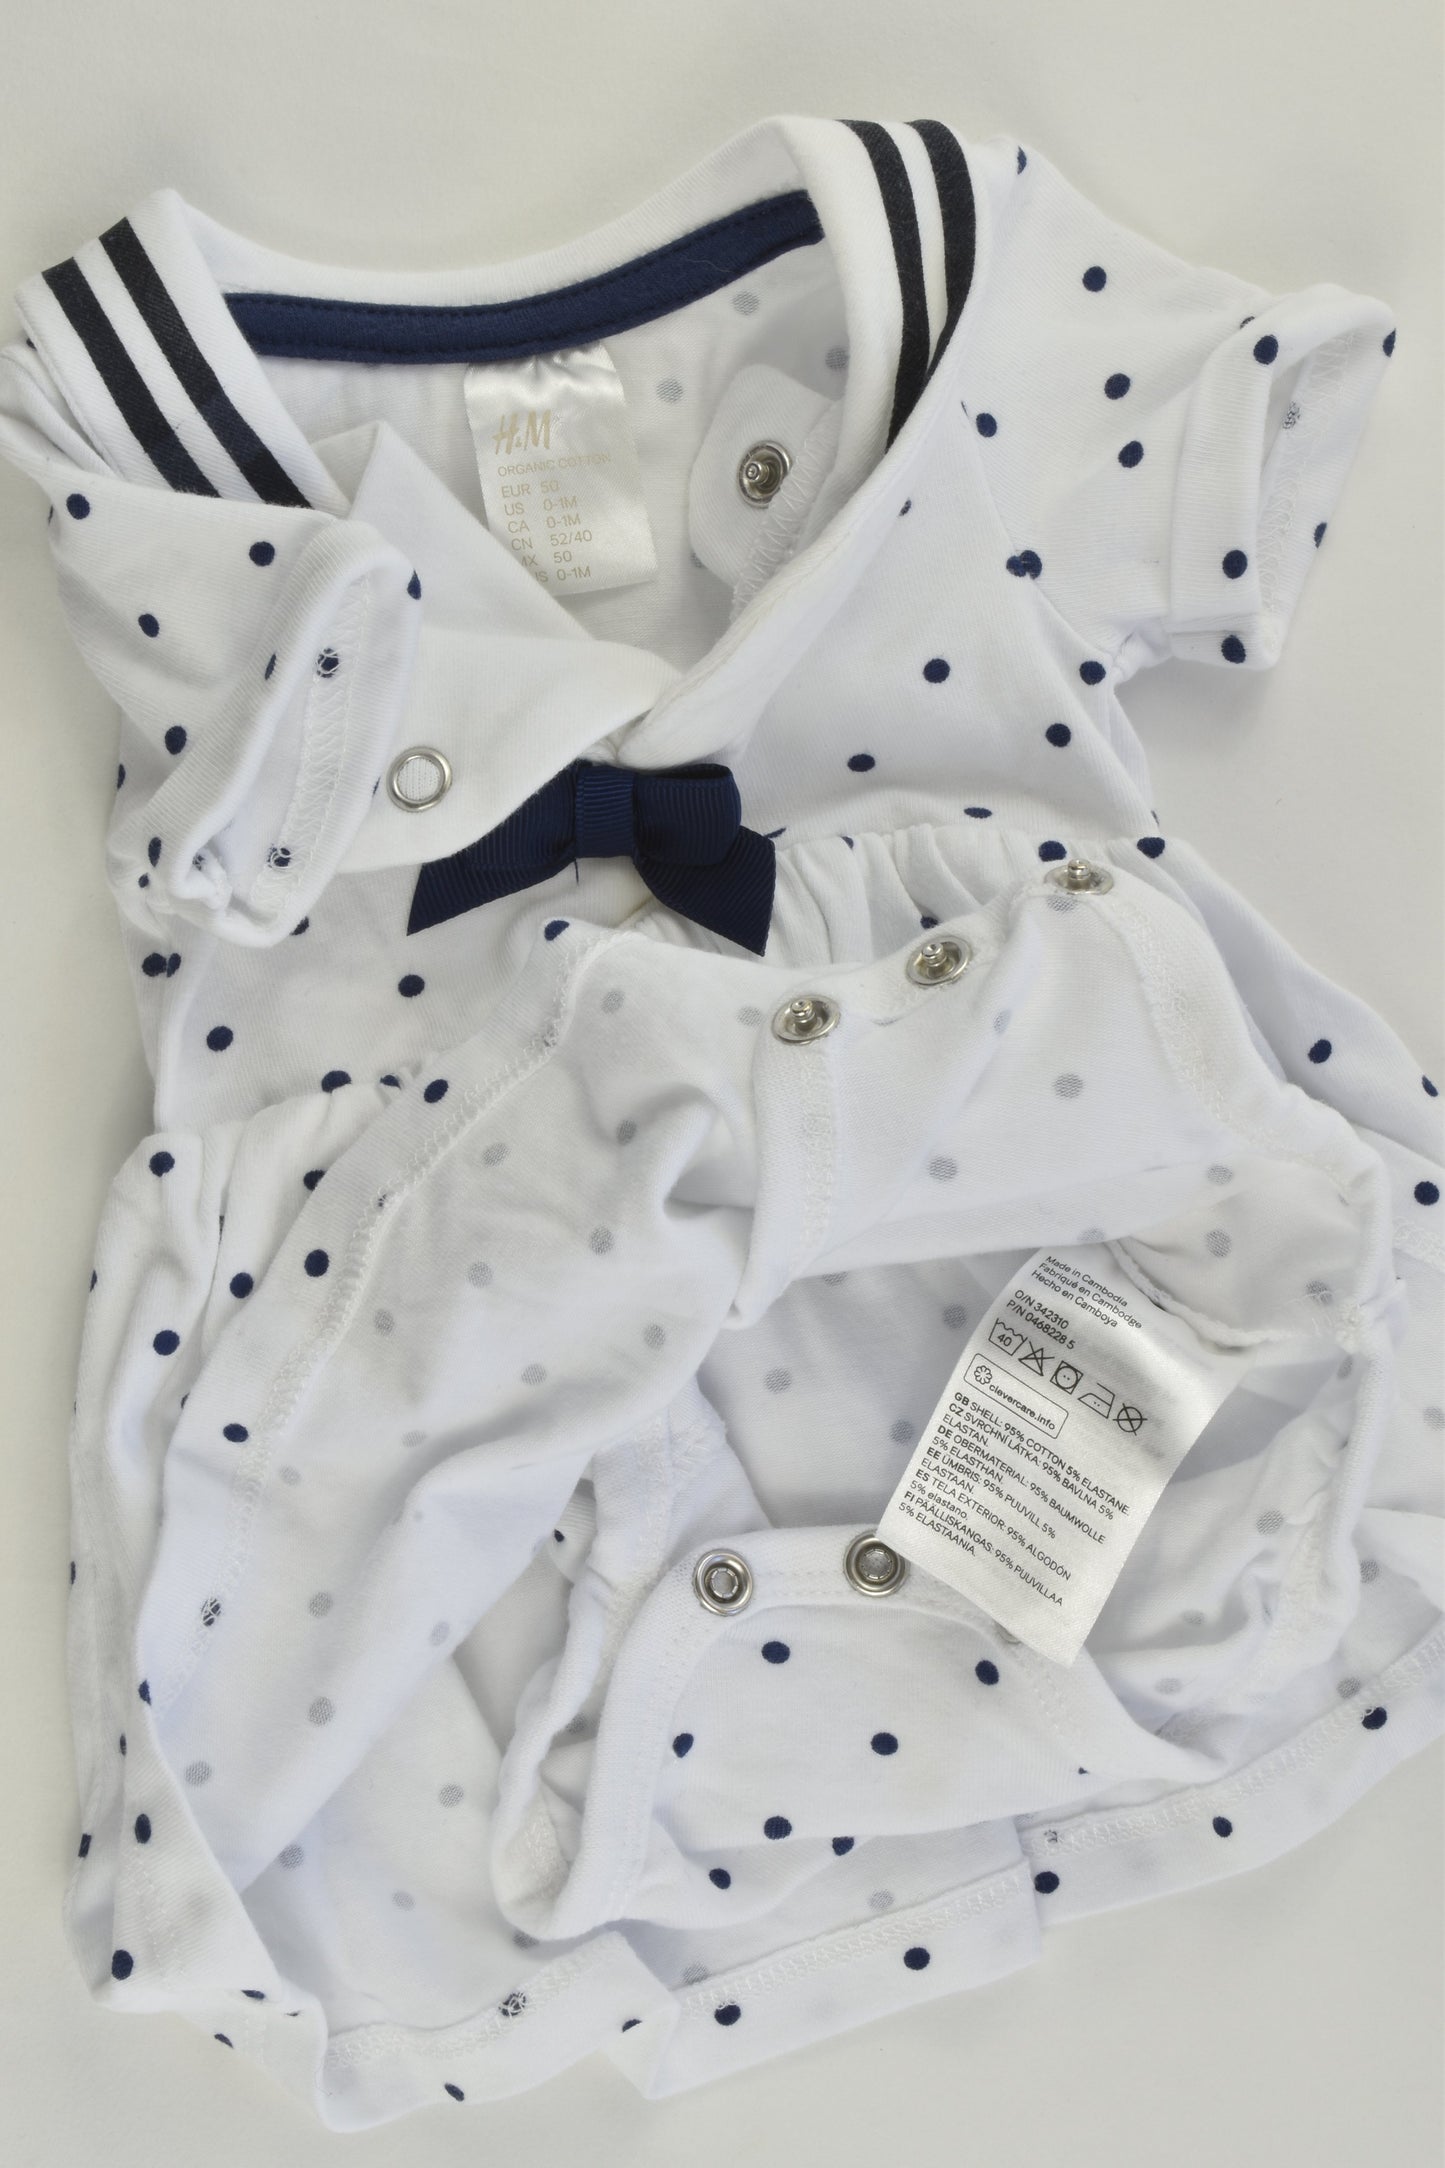 H&M Size 0000 (50 cm) Nautical Organic Dress with Bodysuit Underneath